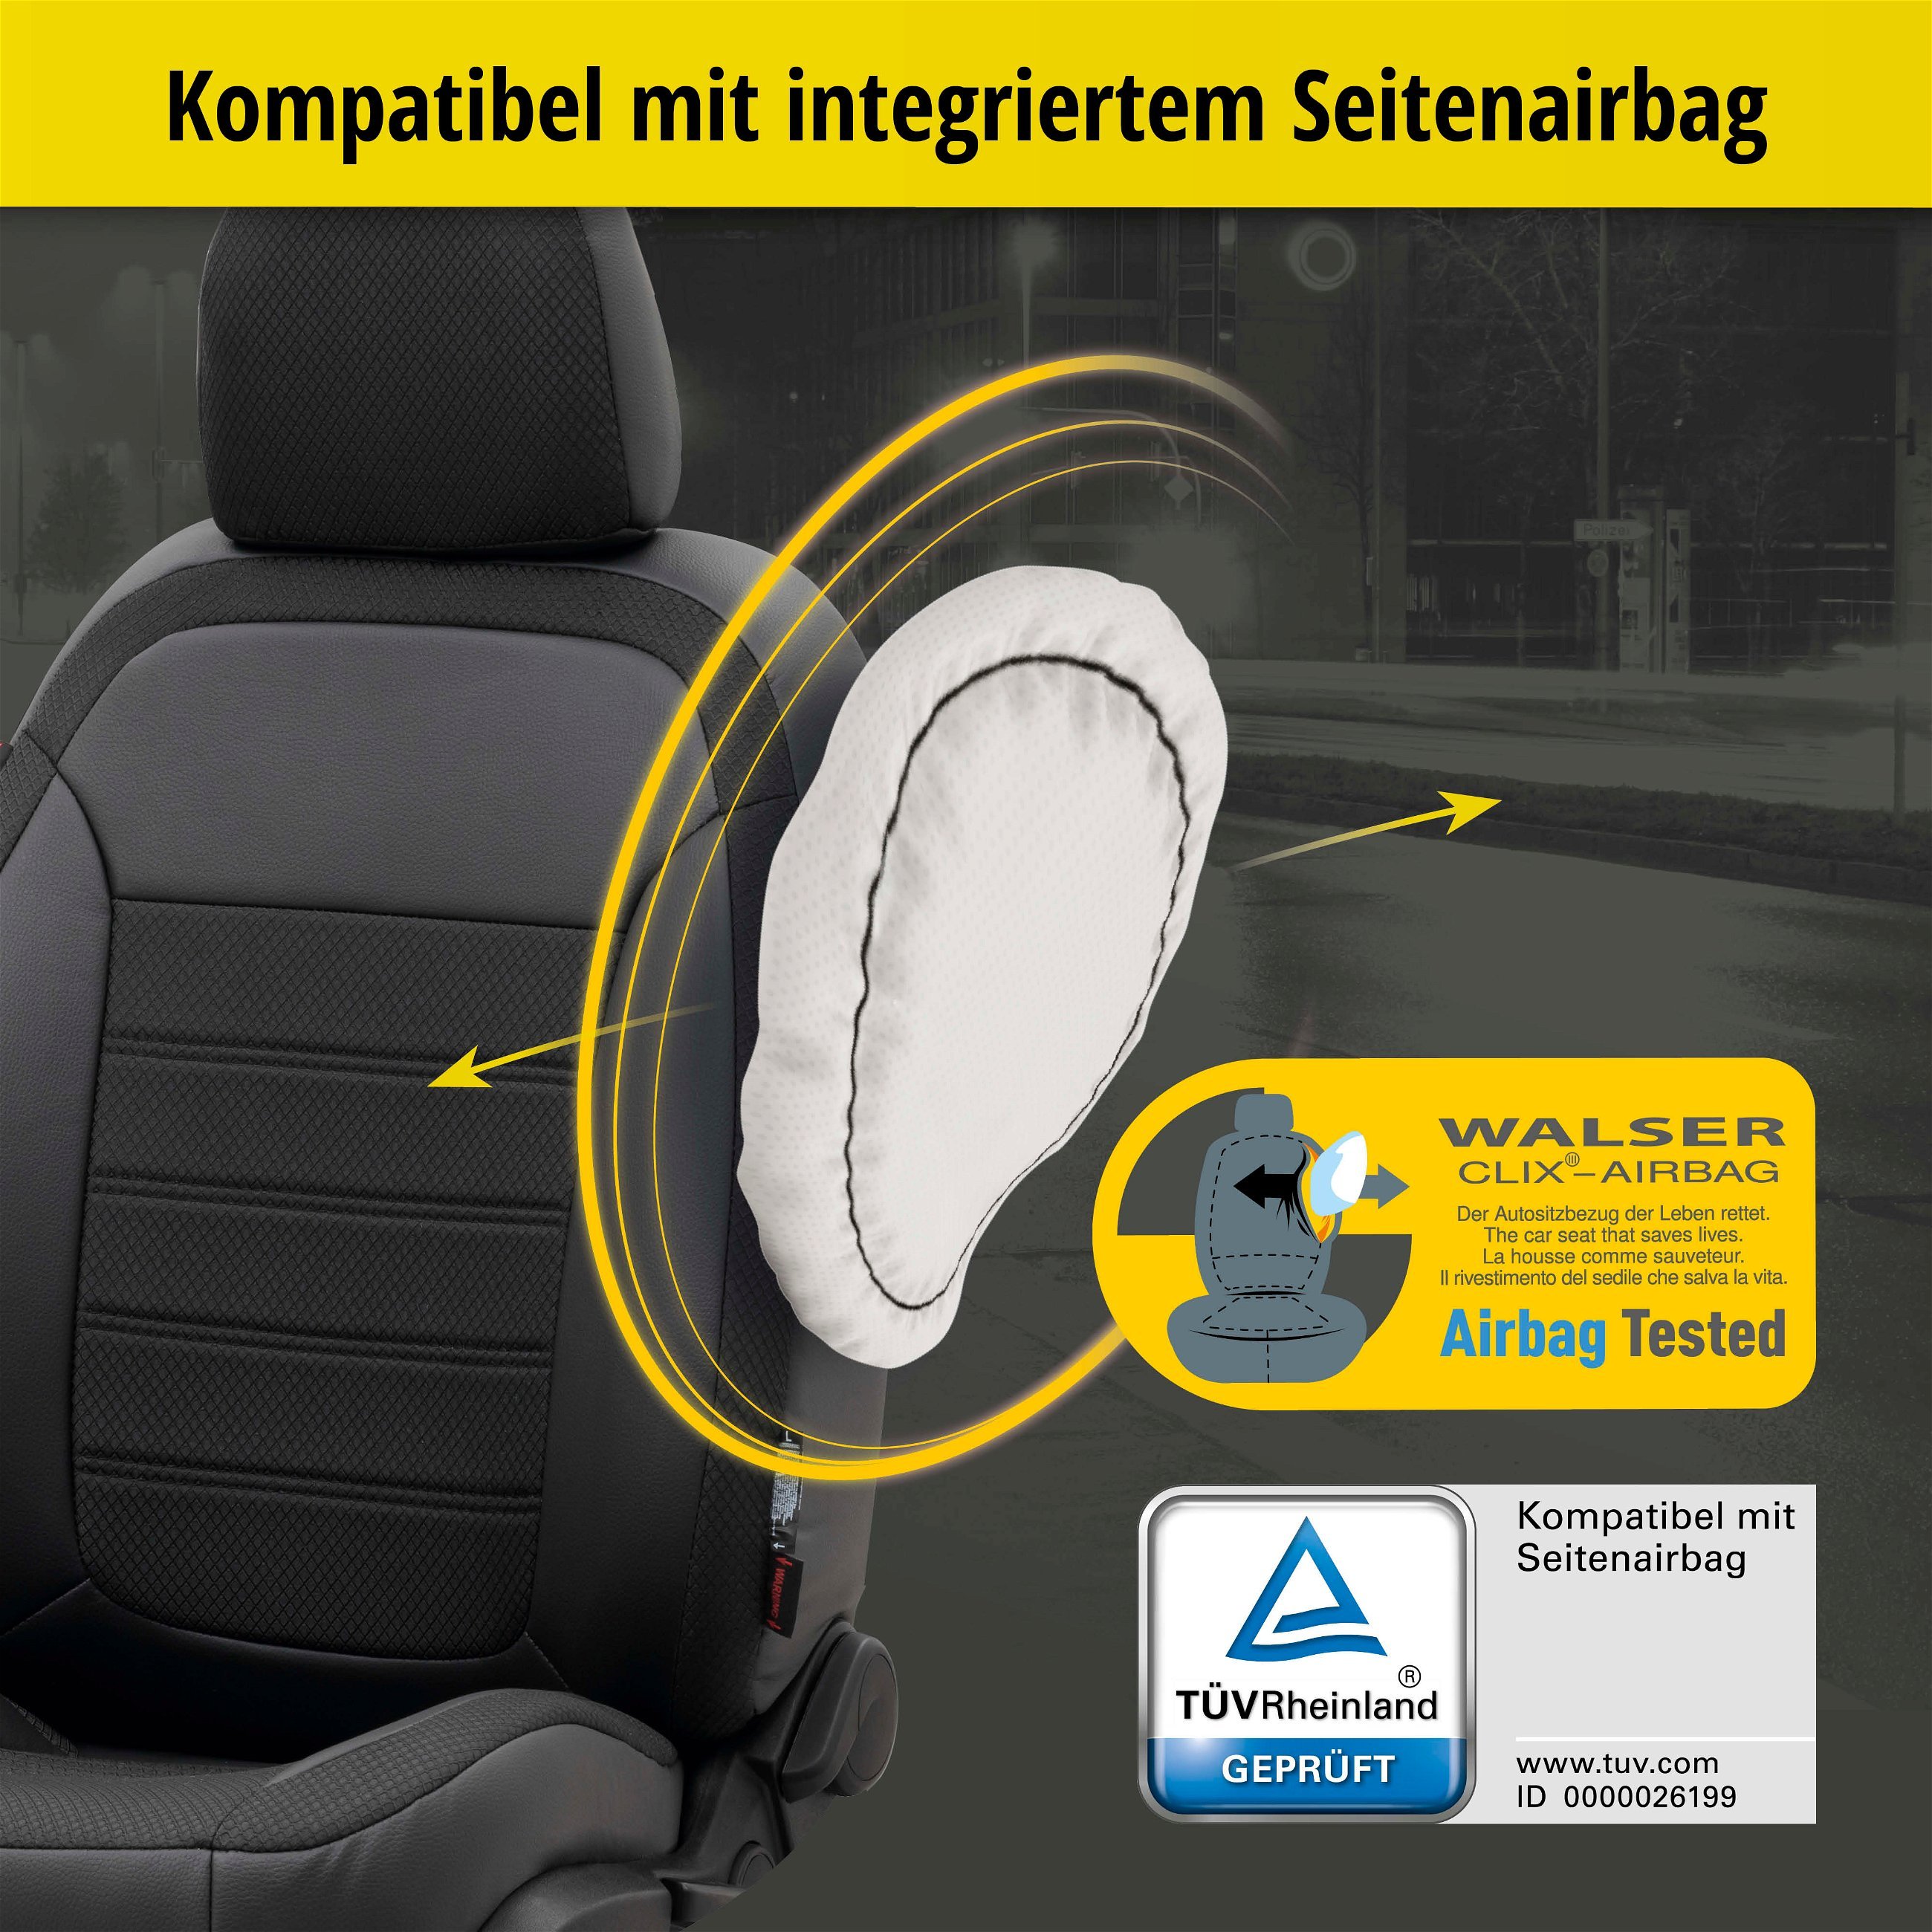 Passform Sitzbezug Aversa für Opel Zafira/Zafira Family B A05 07/2005-05/2019, 2 Einzelsitzbezüge für Normalsitze